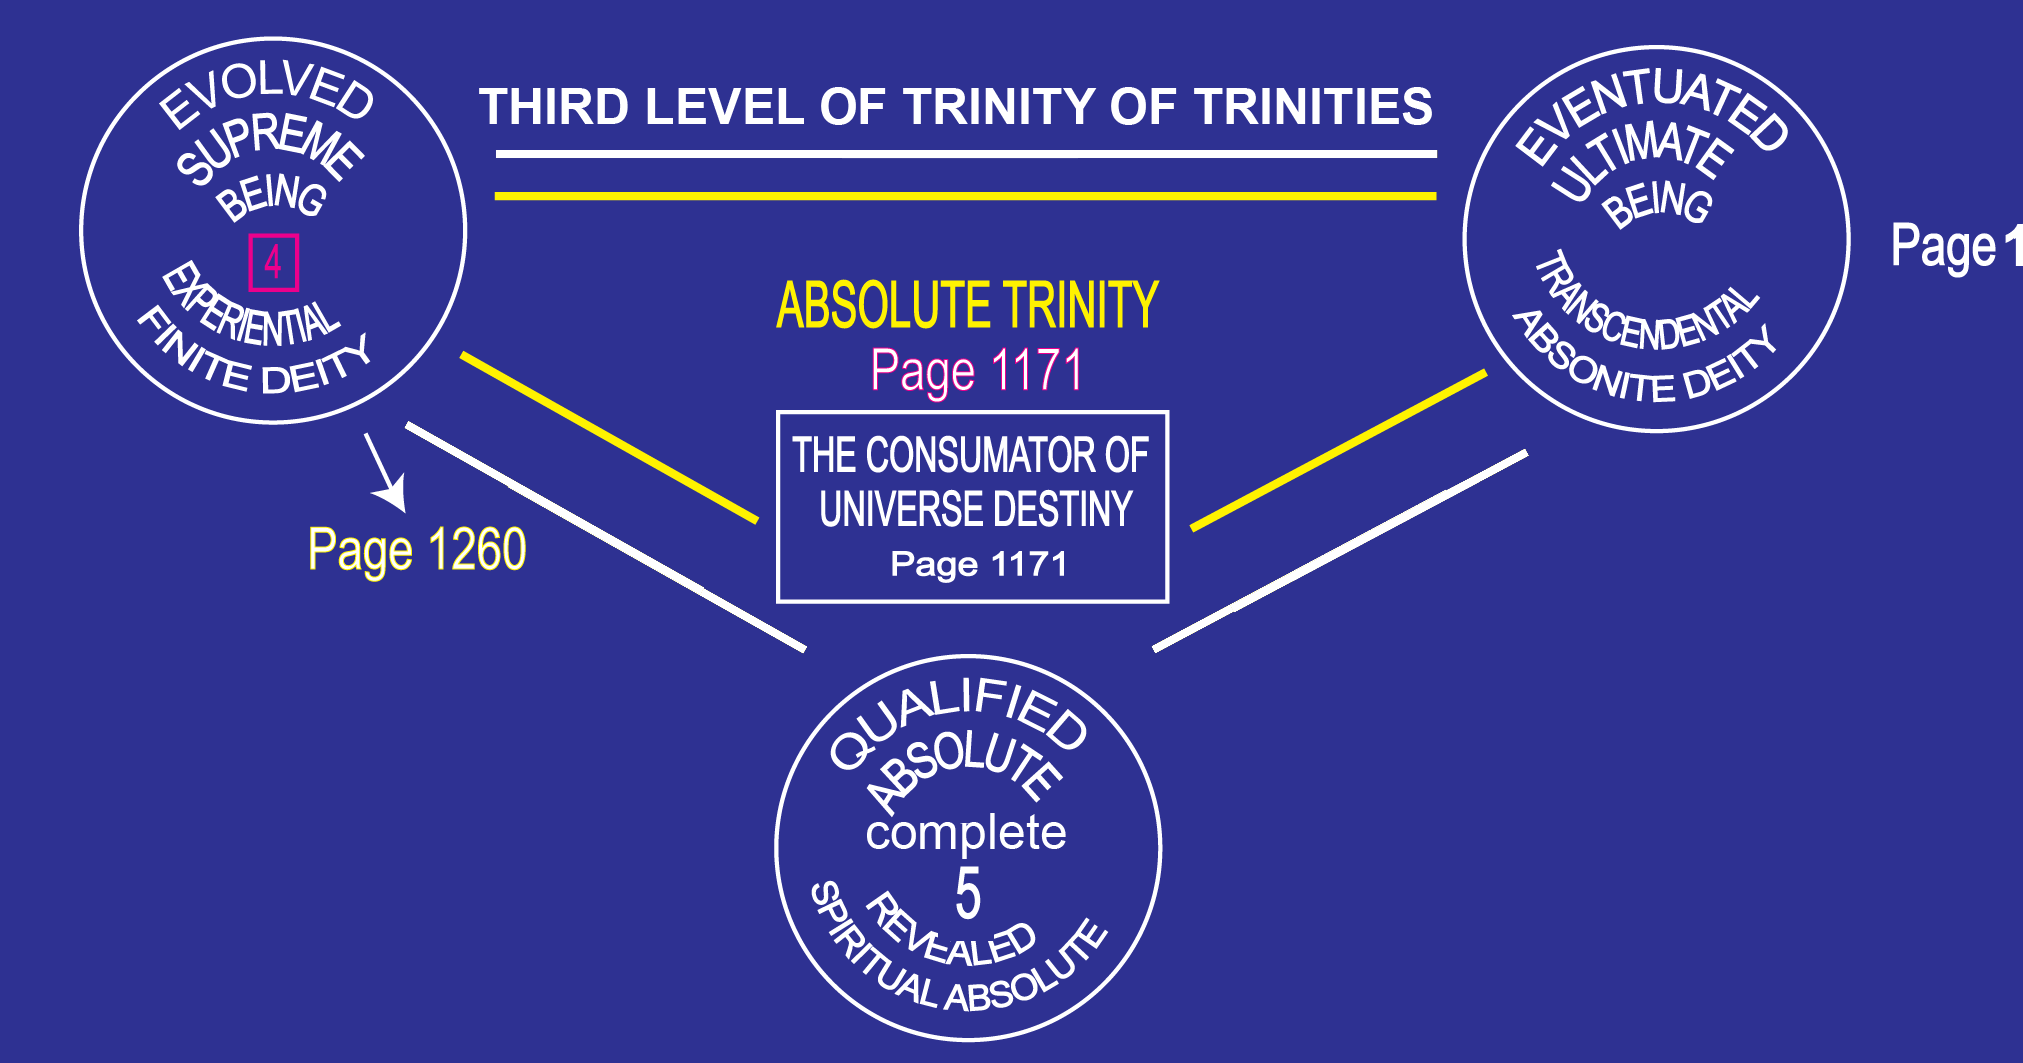 Third Level of Trinity of Trinities